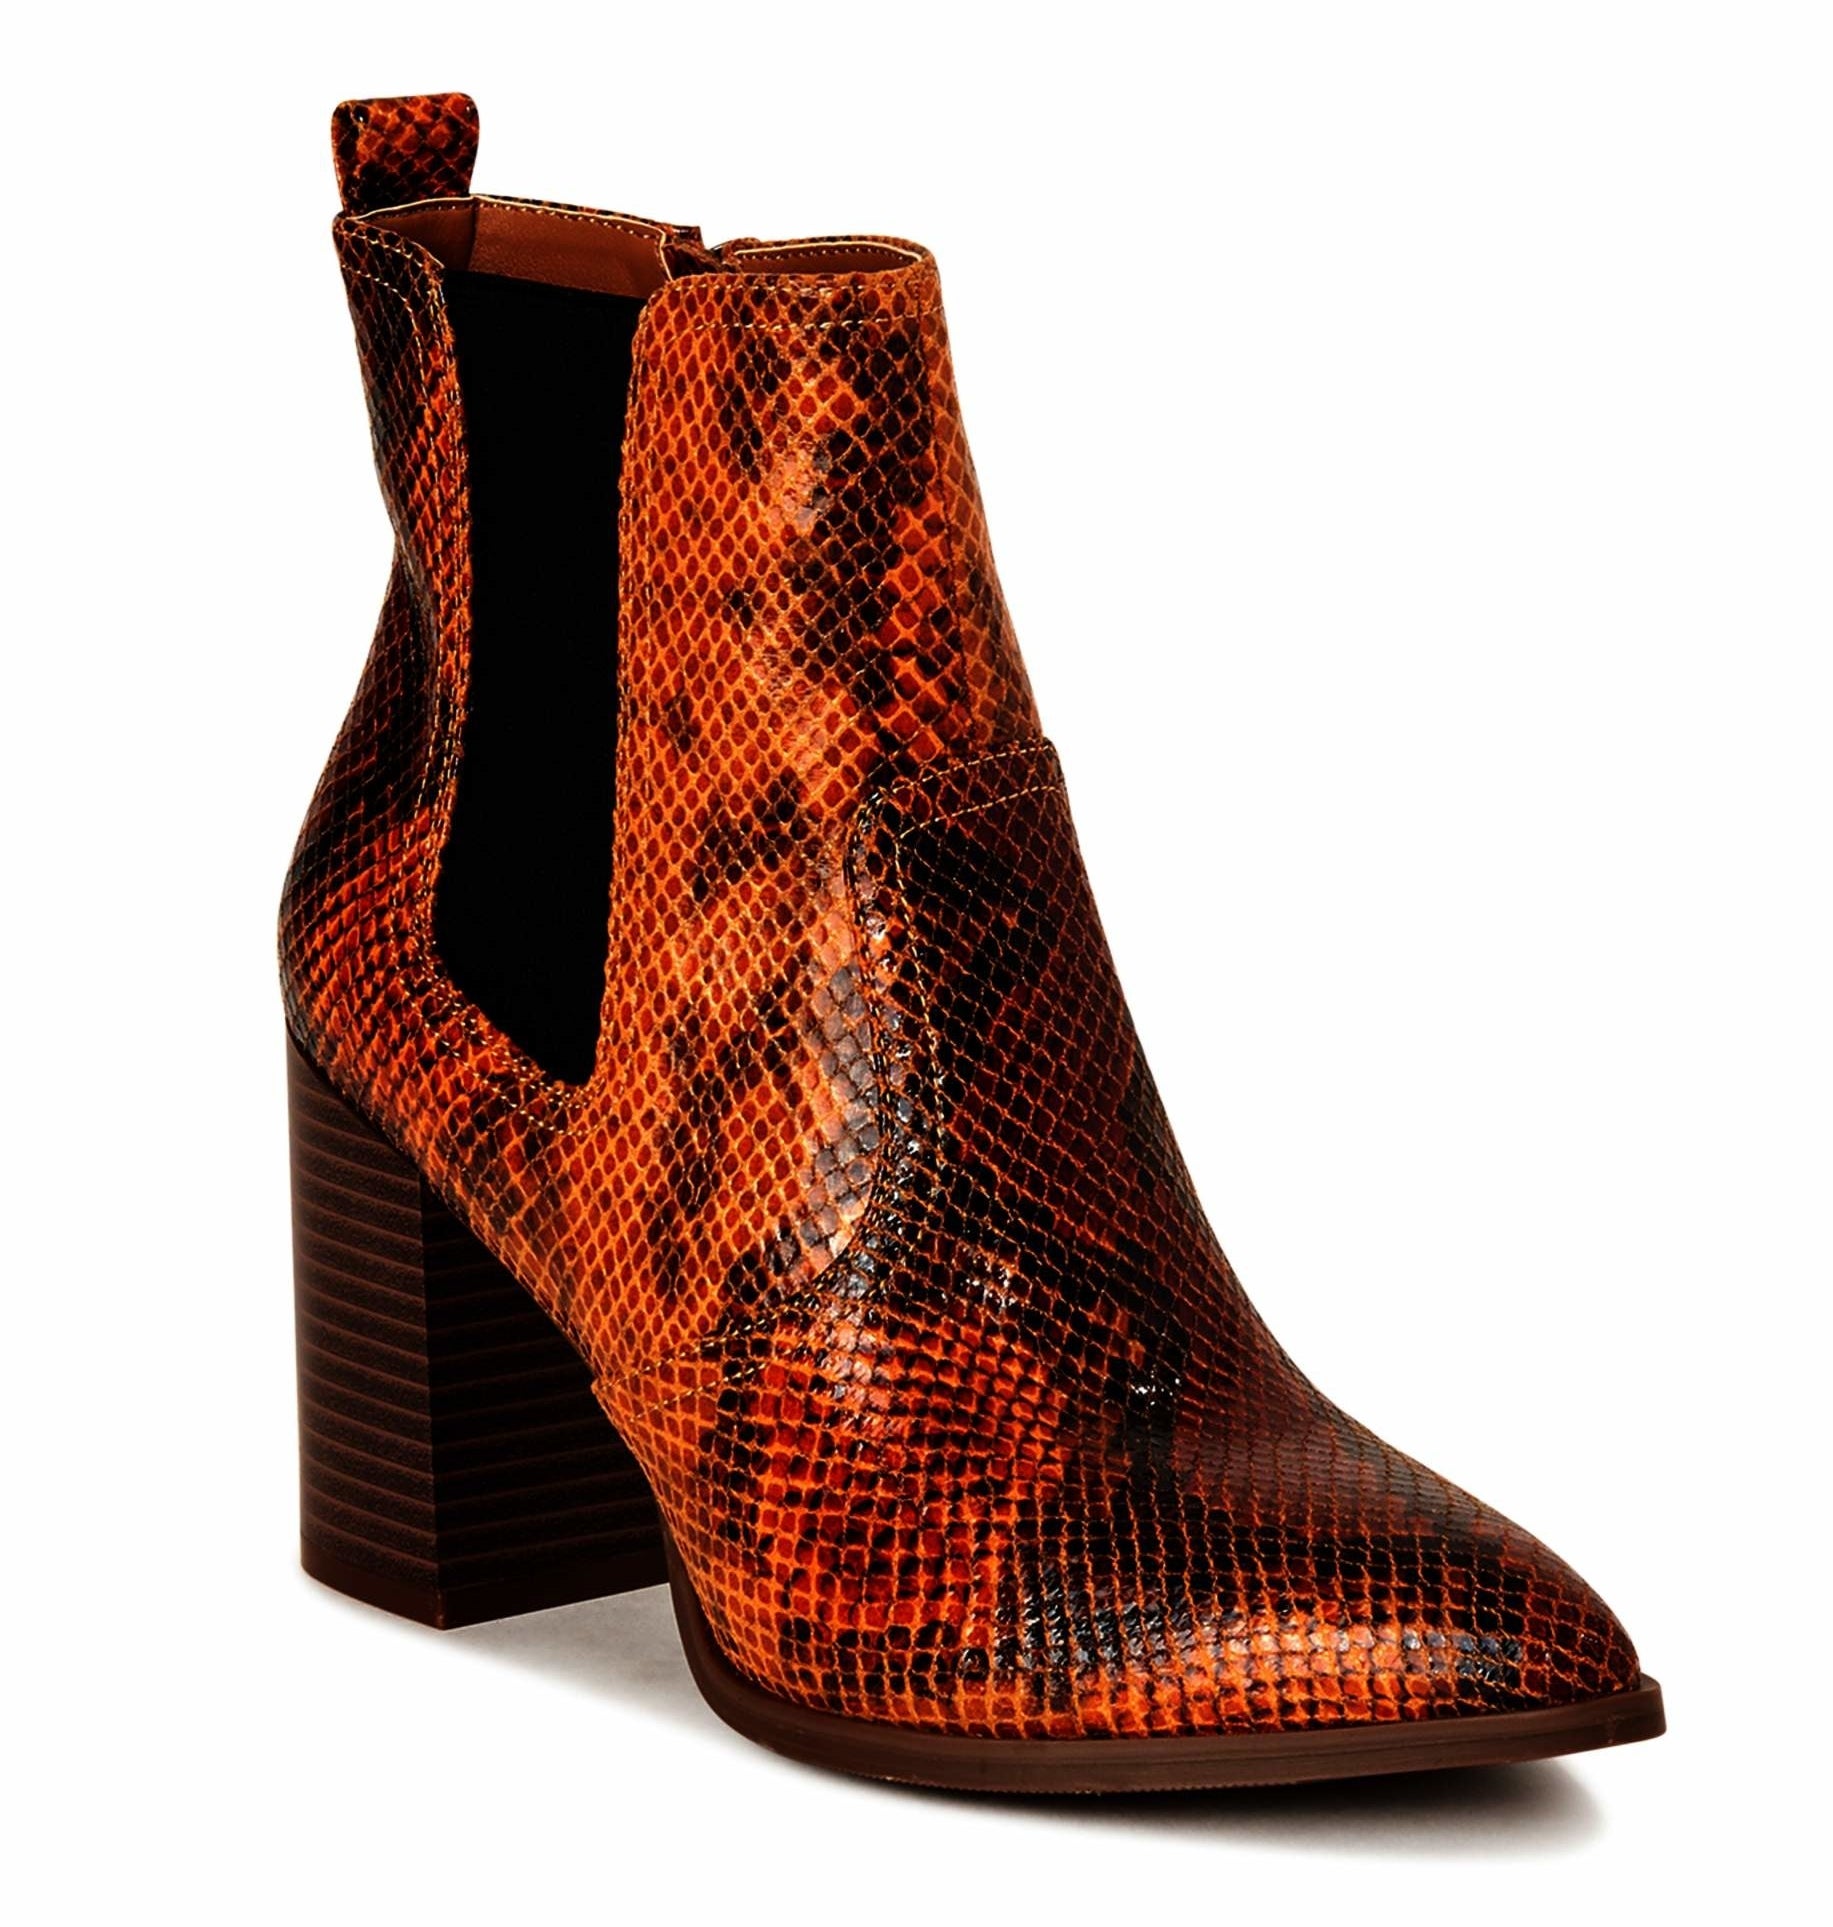 orange snakeskin bootie with a heel